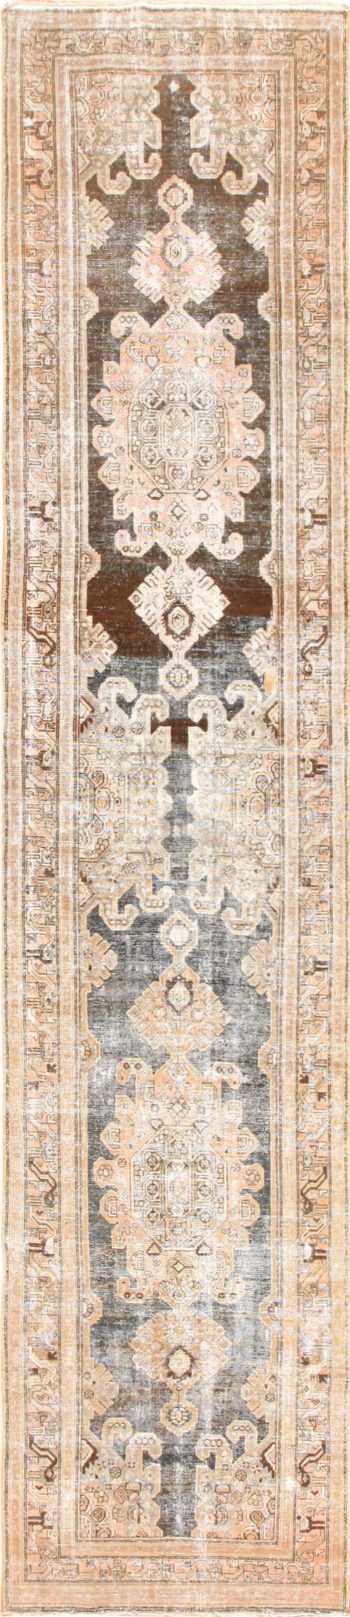 Full view Antique Persian Malayer rug 50043 by Nazmiyal